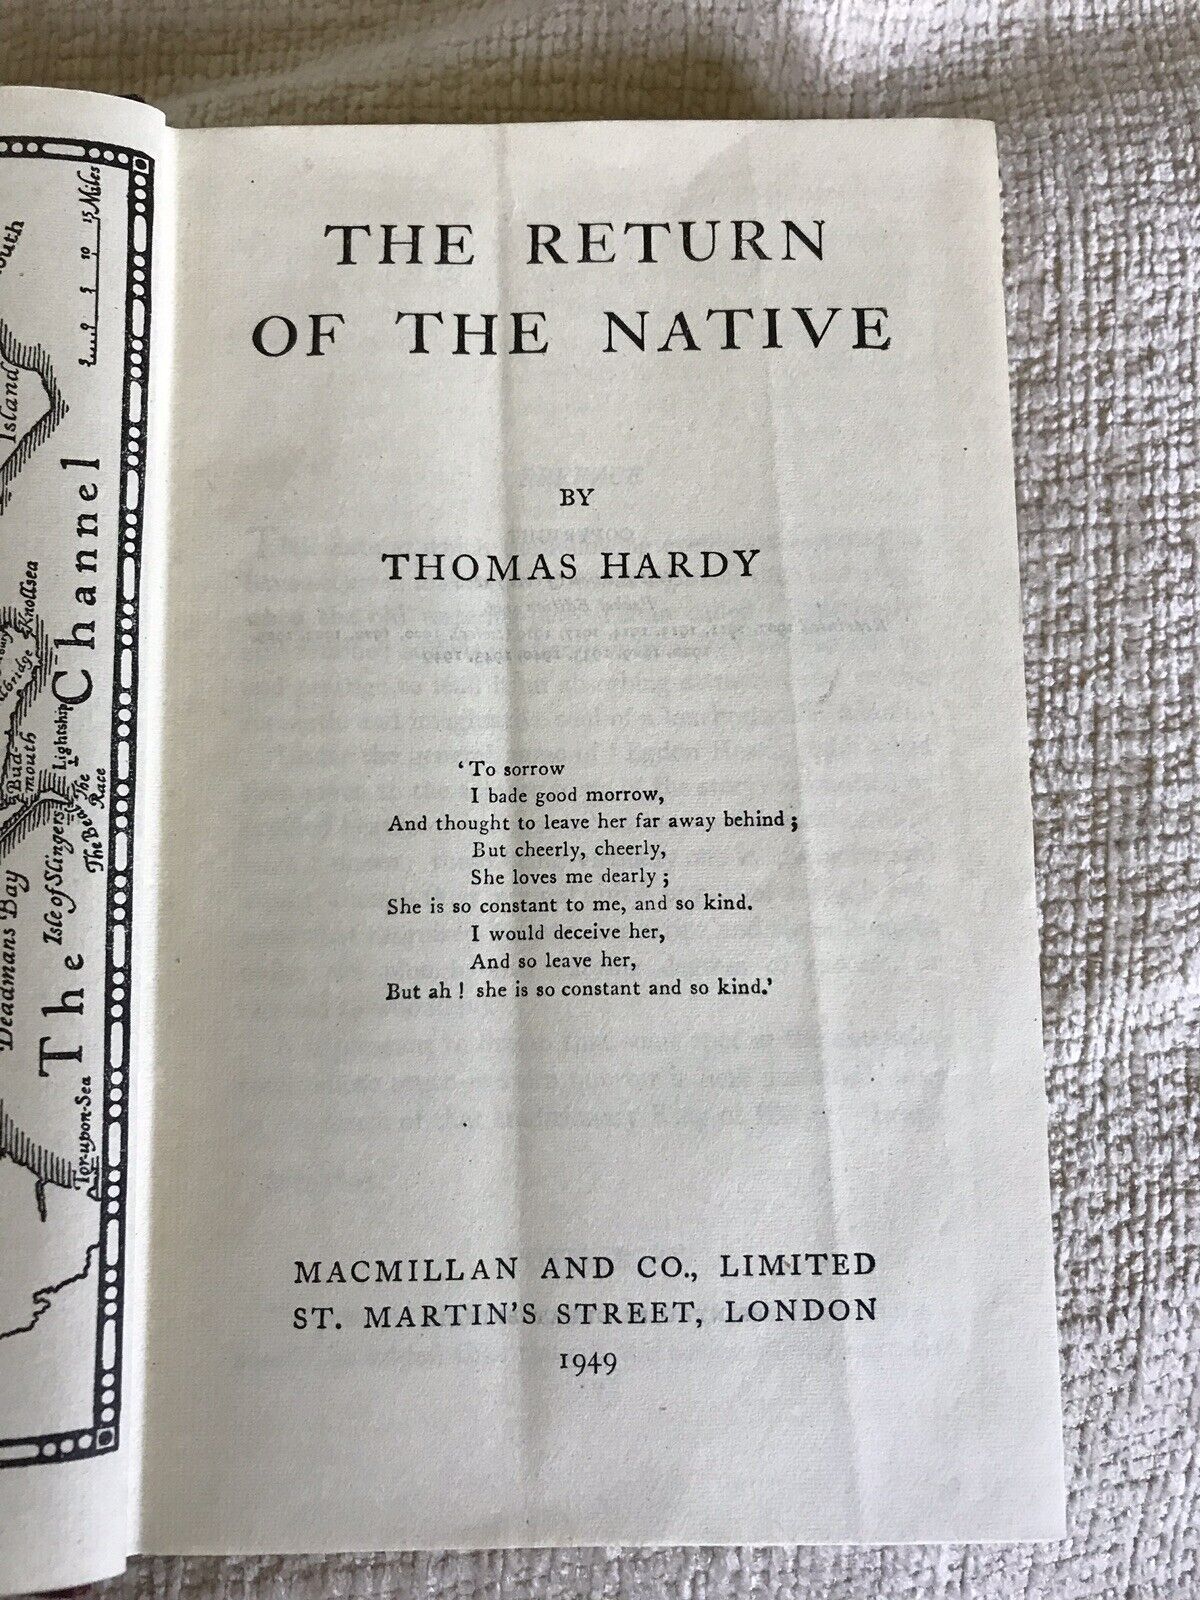 The Return of the Native, Thomas Hardy, 1949, Macmillan, Gut